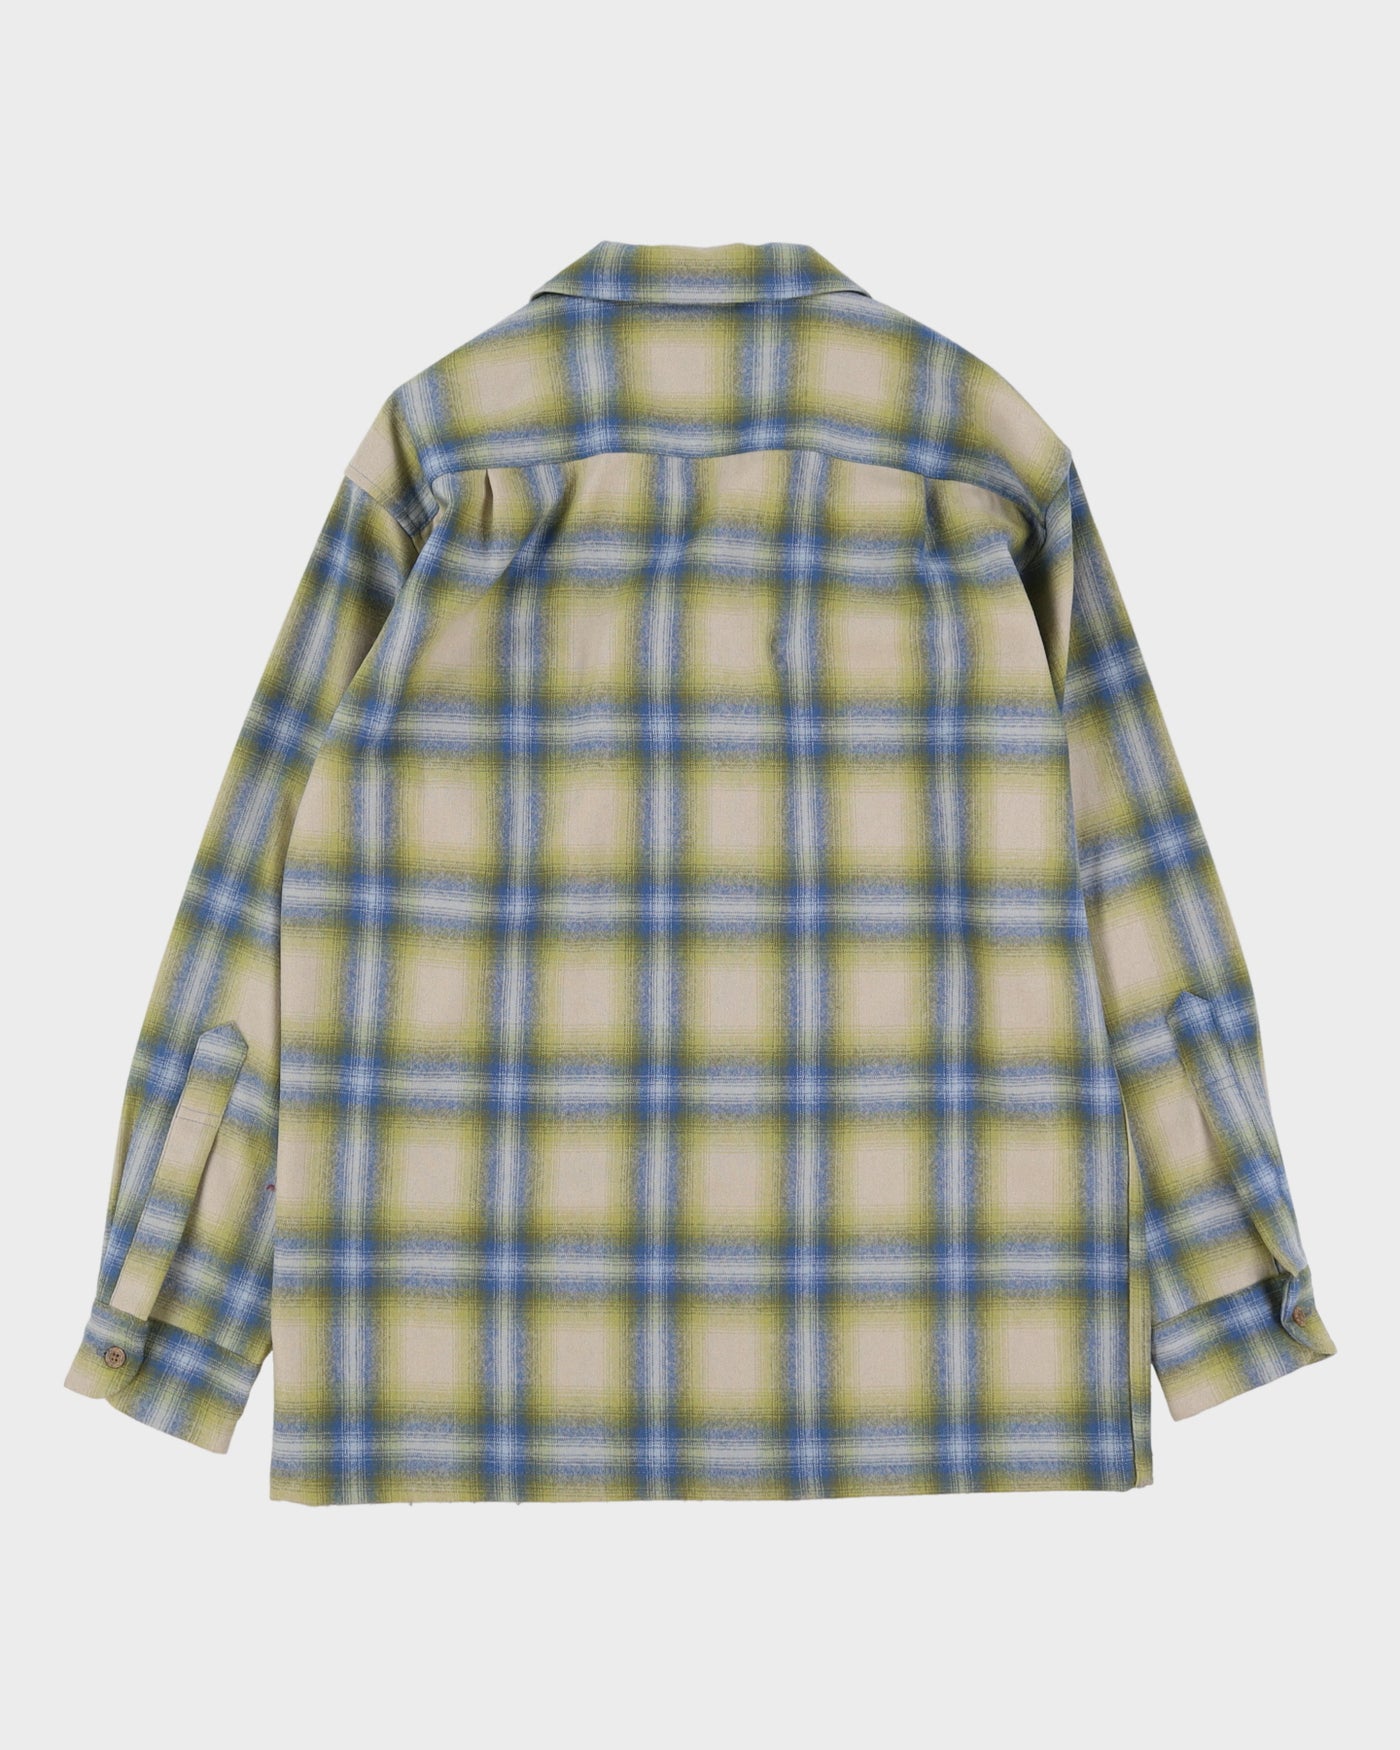 Pendleton Green Checked Wool Board Shirt - M / L